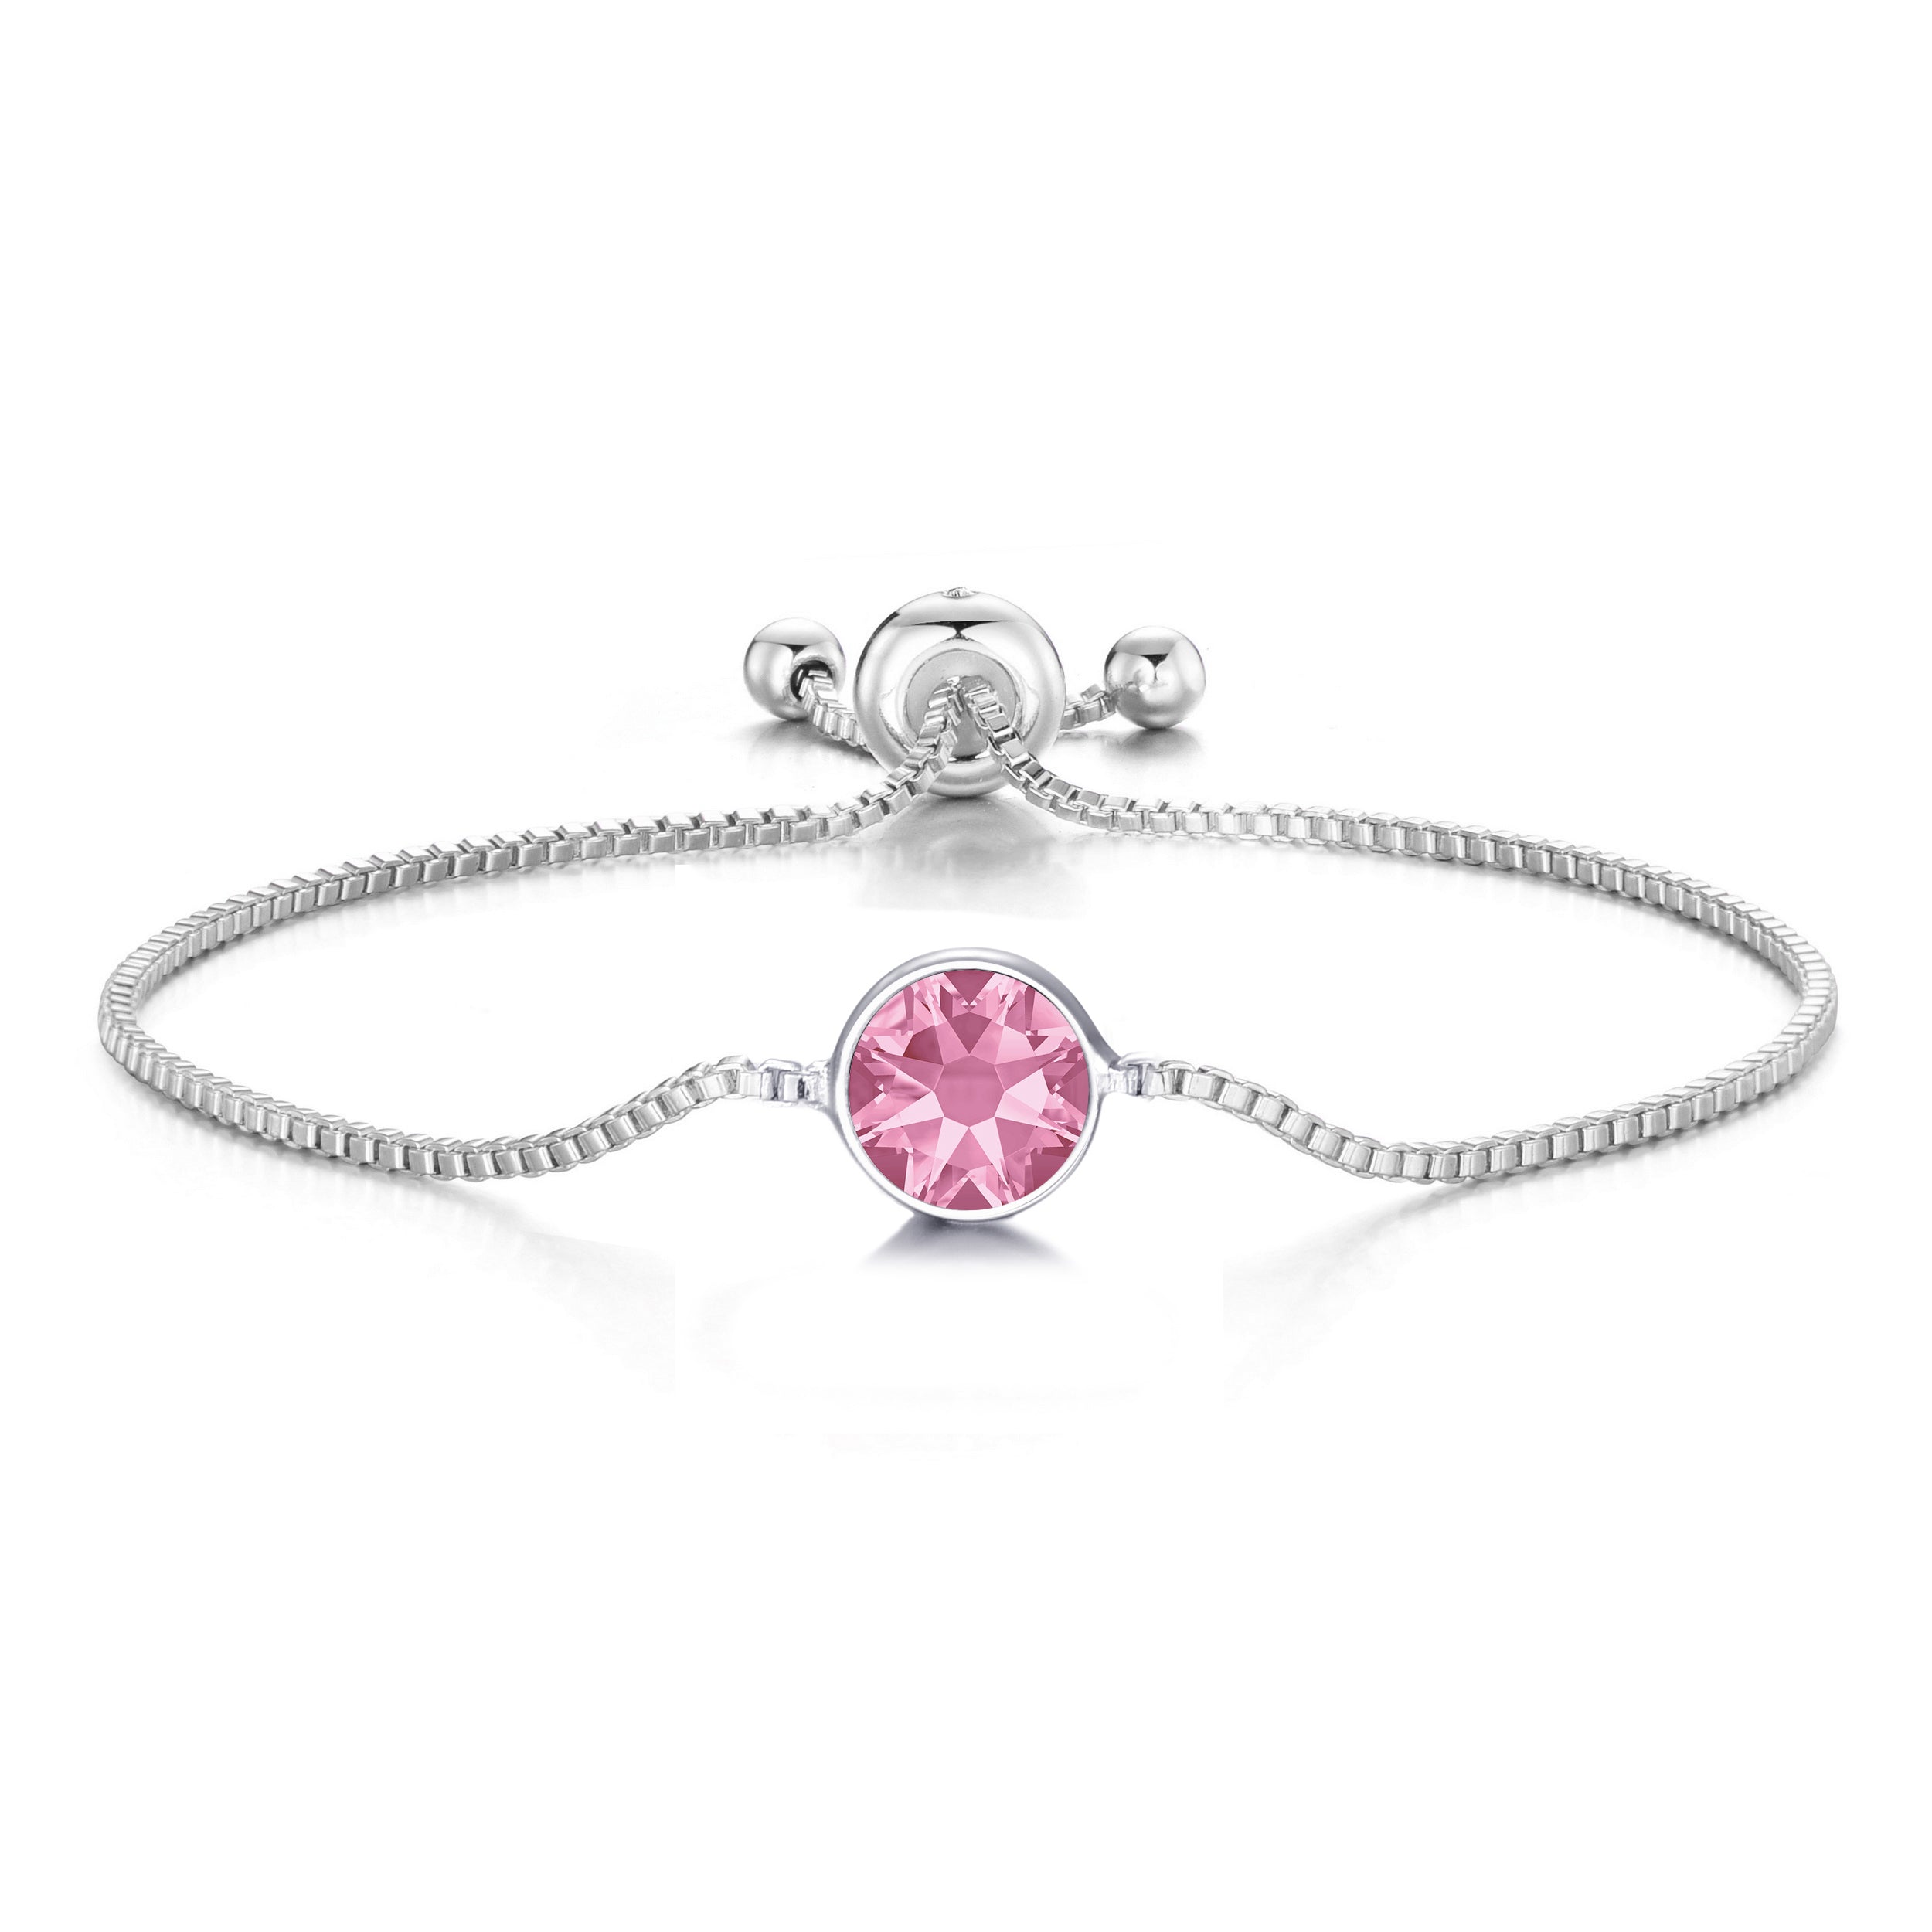 Pink Crystal Bracelet Created with Zircondia® Crystals by Philip Jones Jewellery